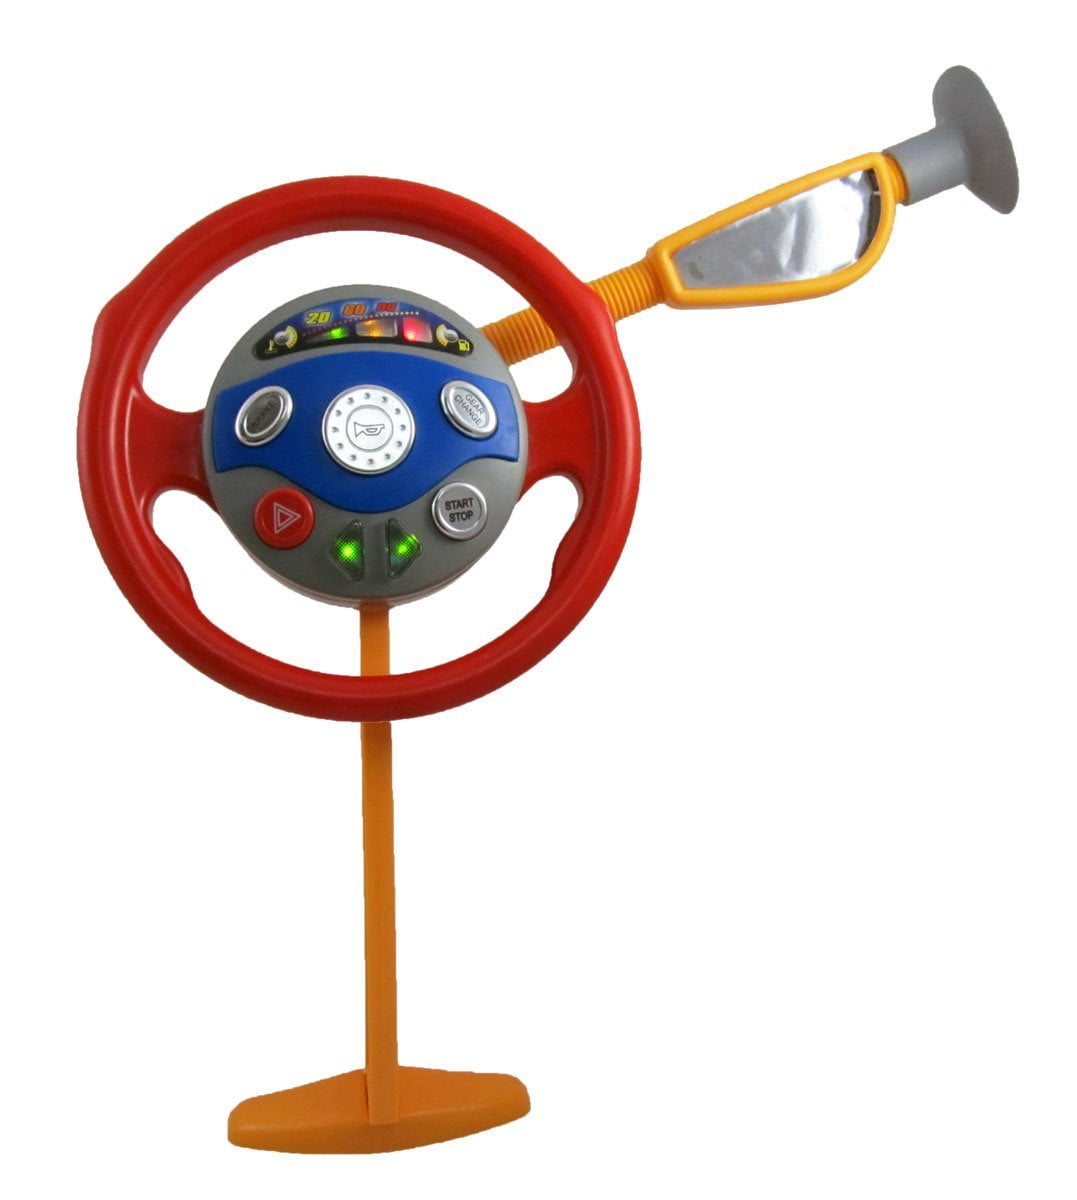 Cell Phone & Car Keys Set with Lights & Sound Developmental Toy Steering Wheel 